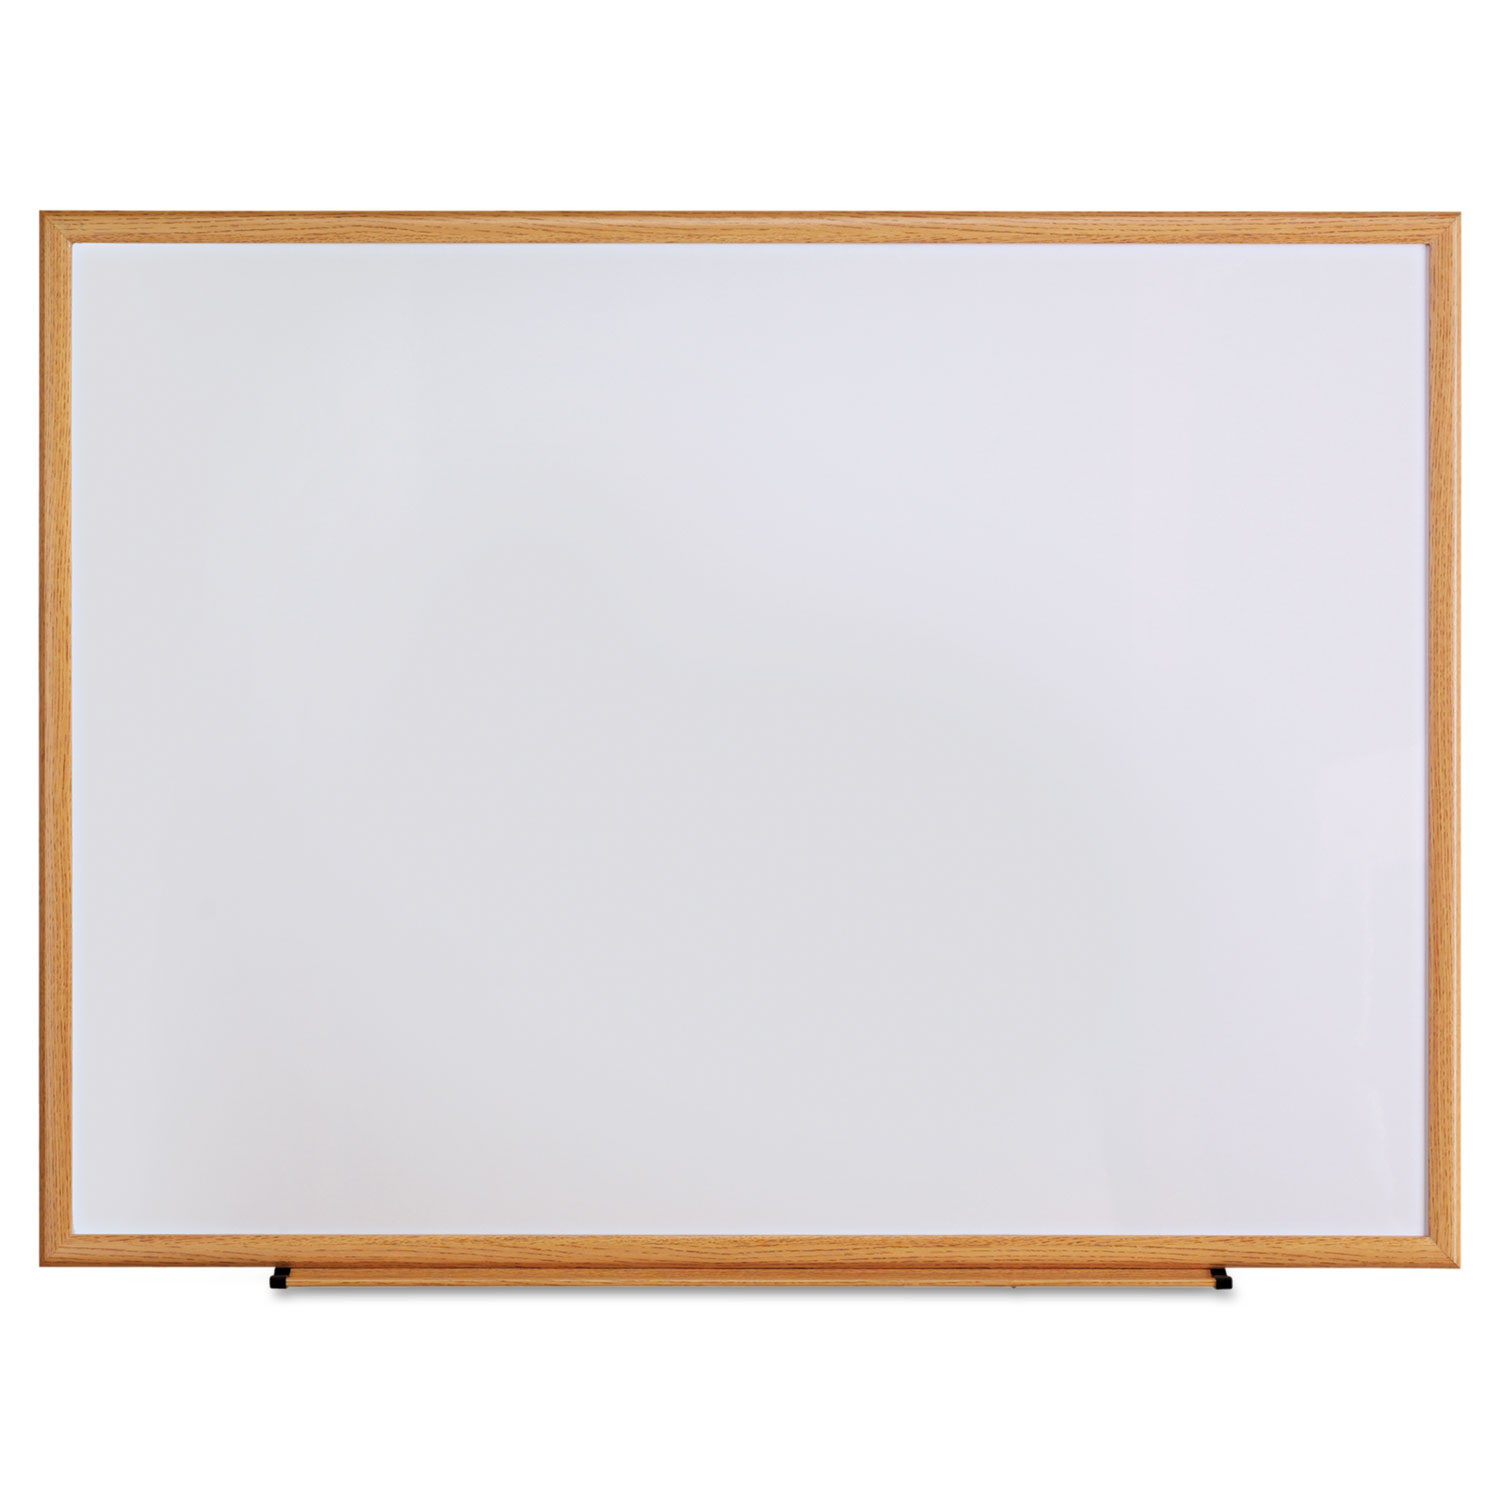  Universal UNV43618 Dry Erase Board, Melamine, 48 x 36, Oak Frame (UNV43618) 